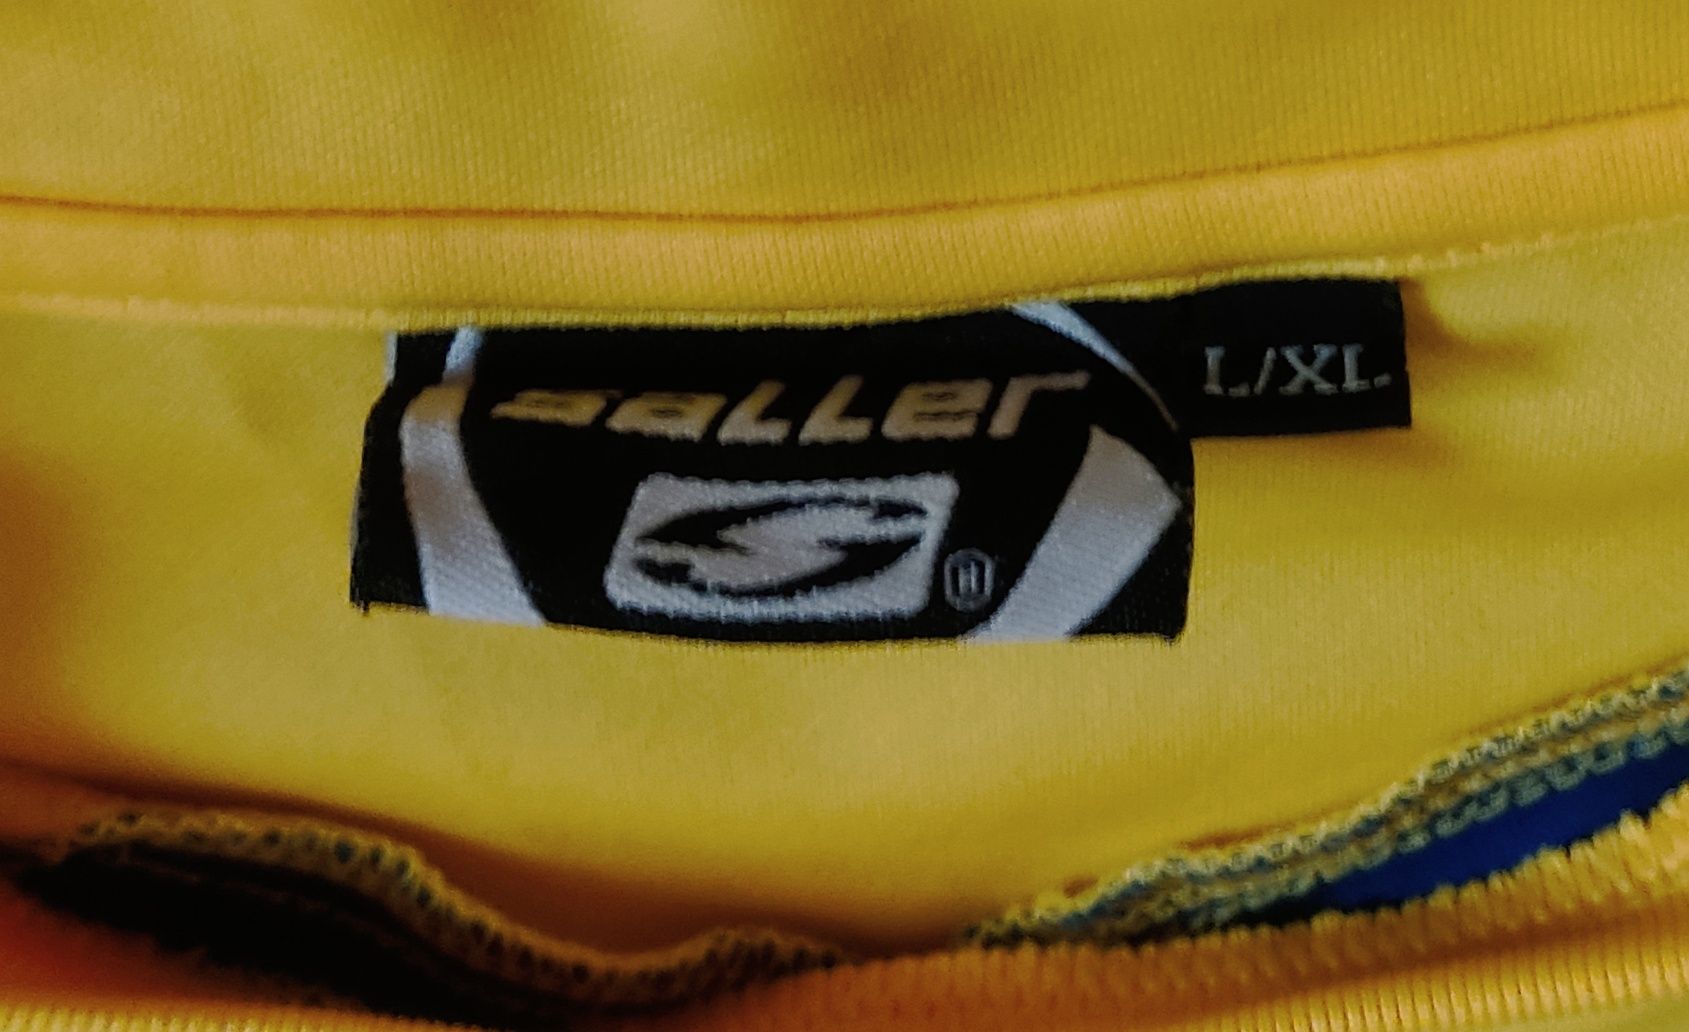 Bluza longsleeve KVC Westerlo (Jupiler Pro League) Saller rozmiar L/XL